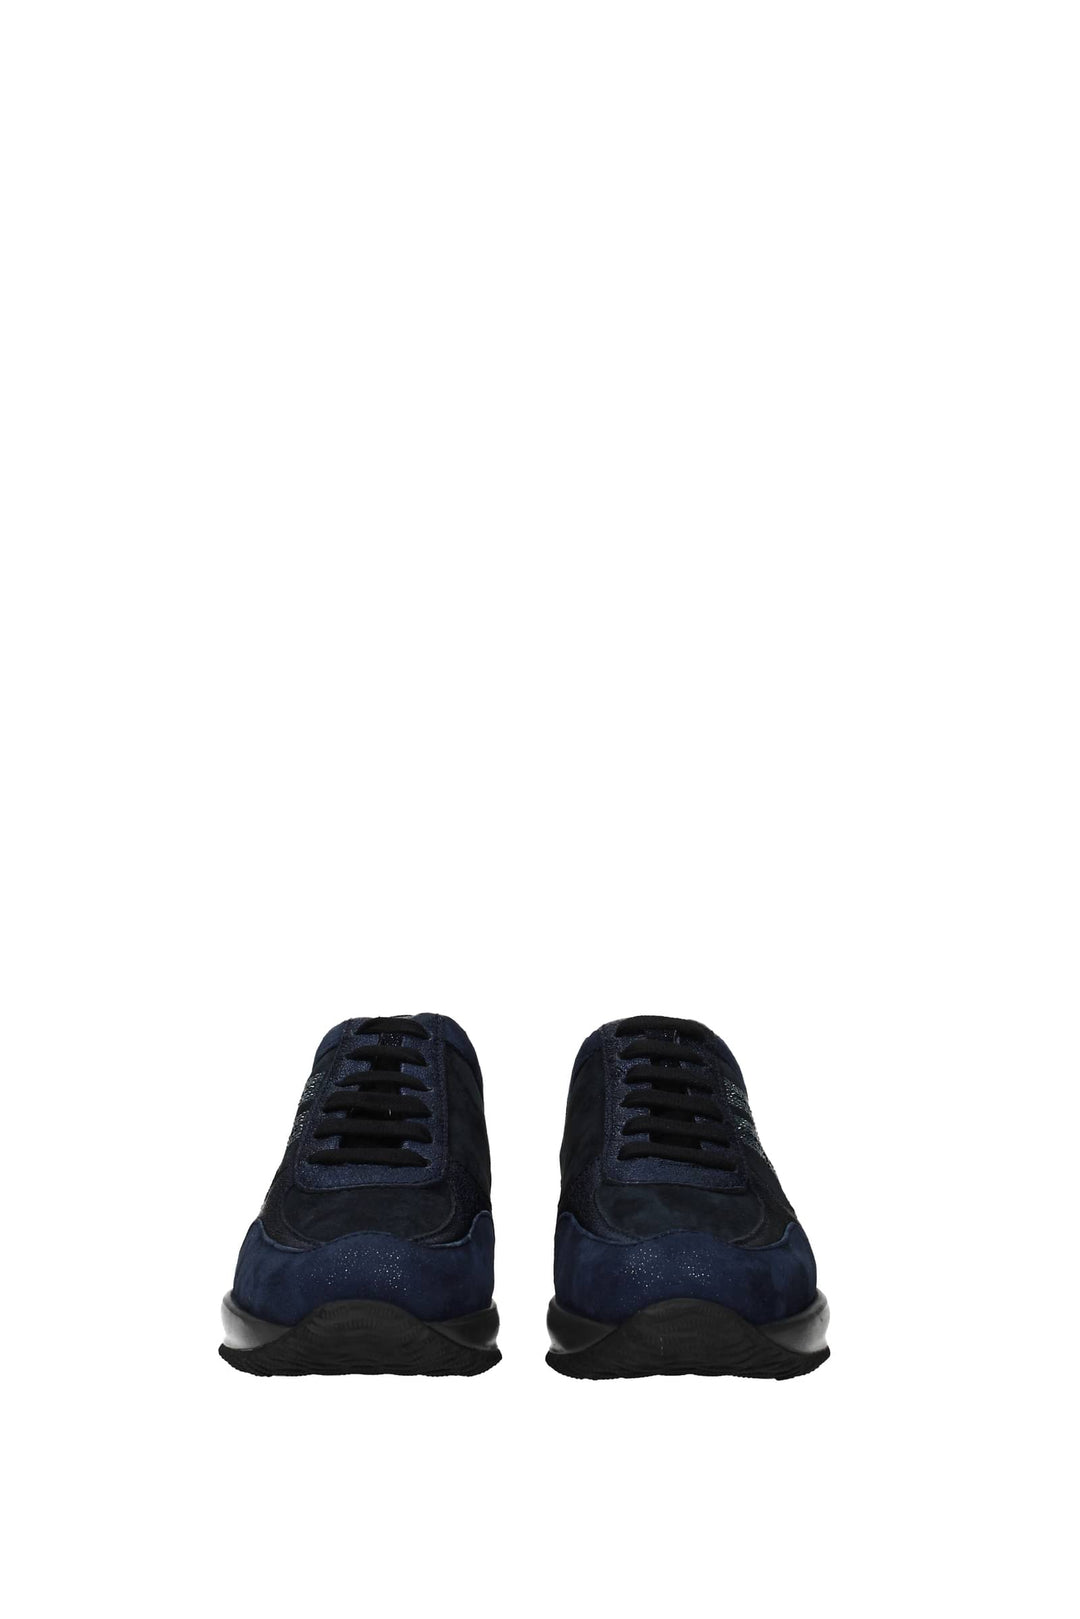 Sneakers Interactive Camoscio Blu Blu Marino - Hogan - Donna